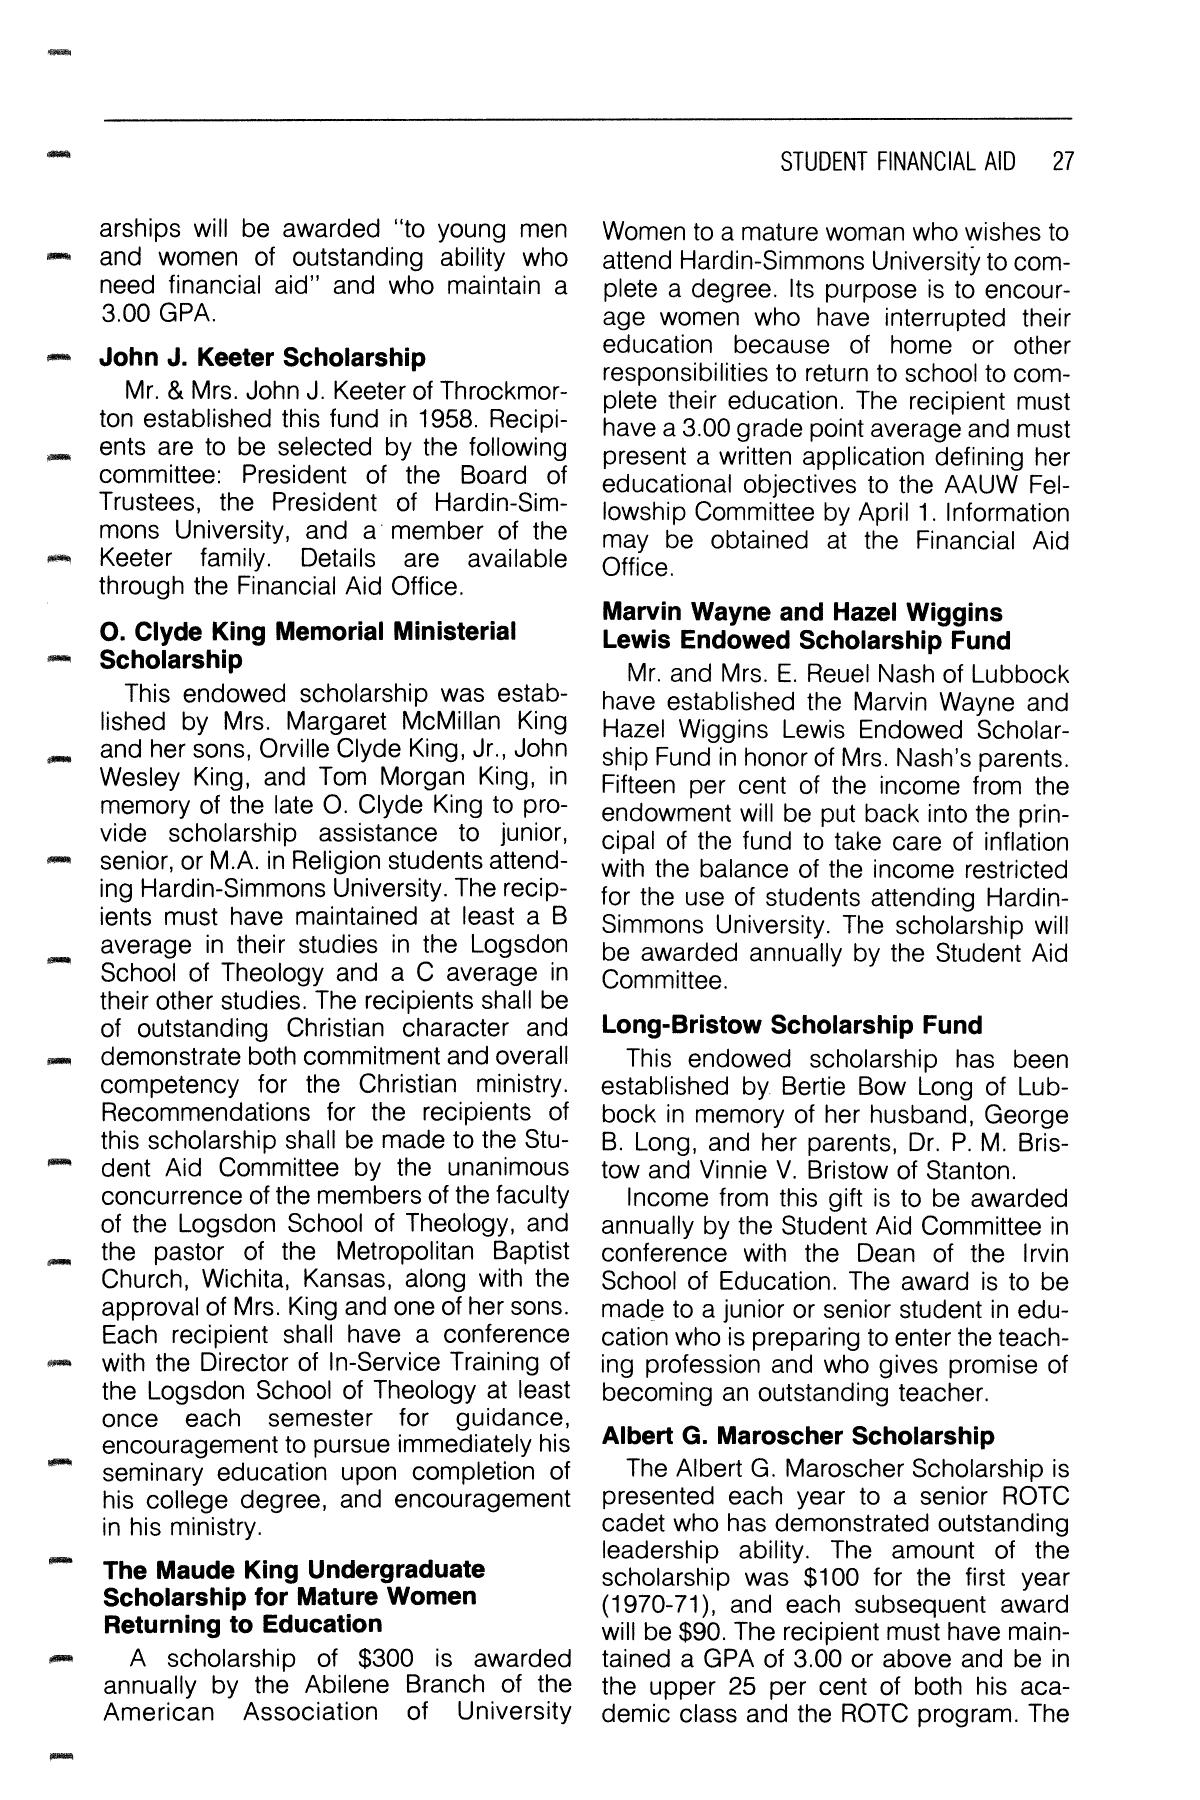 Catalog of Hardin-Simmons University, 1985-1986 Undergraduate Bulletin
                                                
                                                    27
                                                